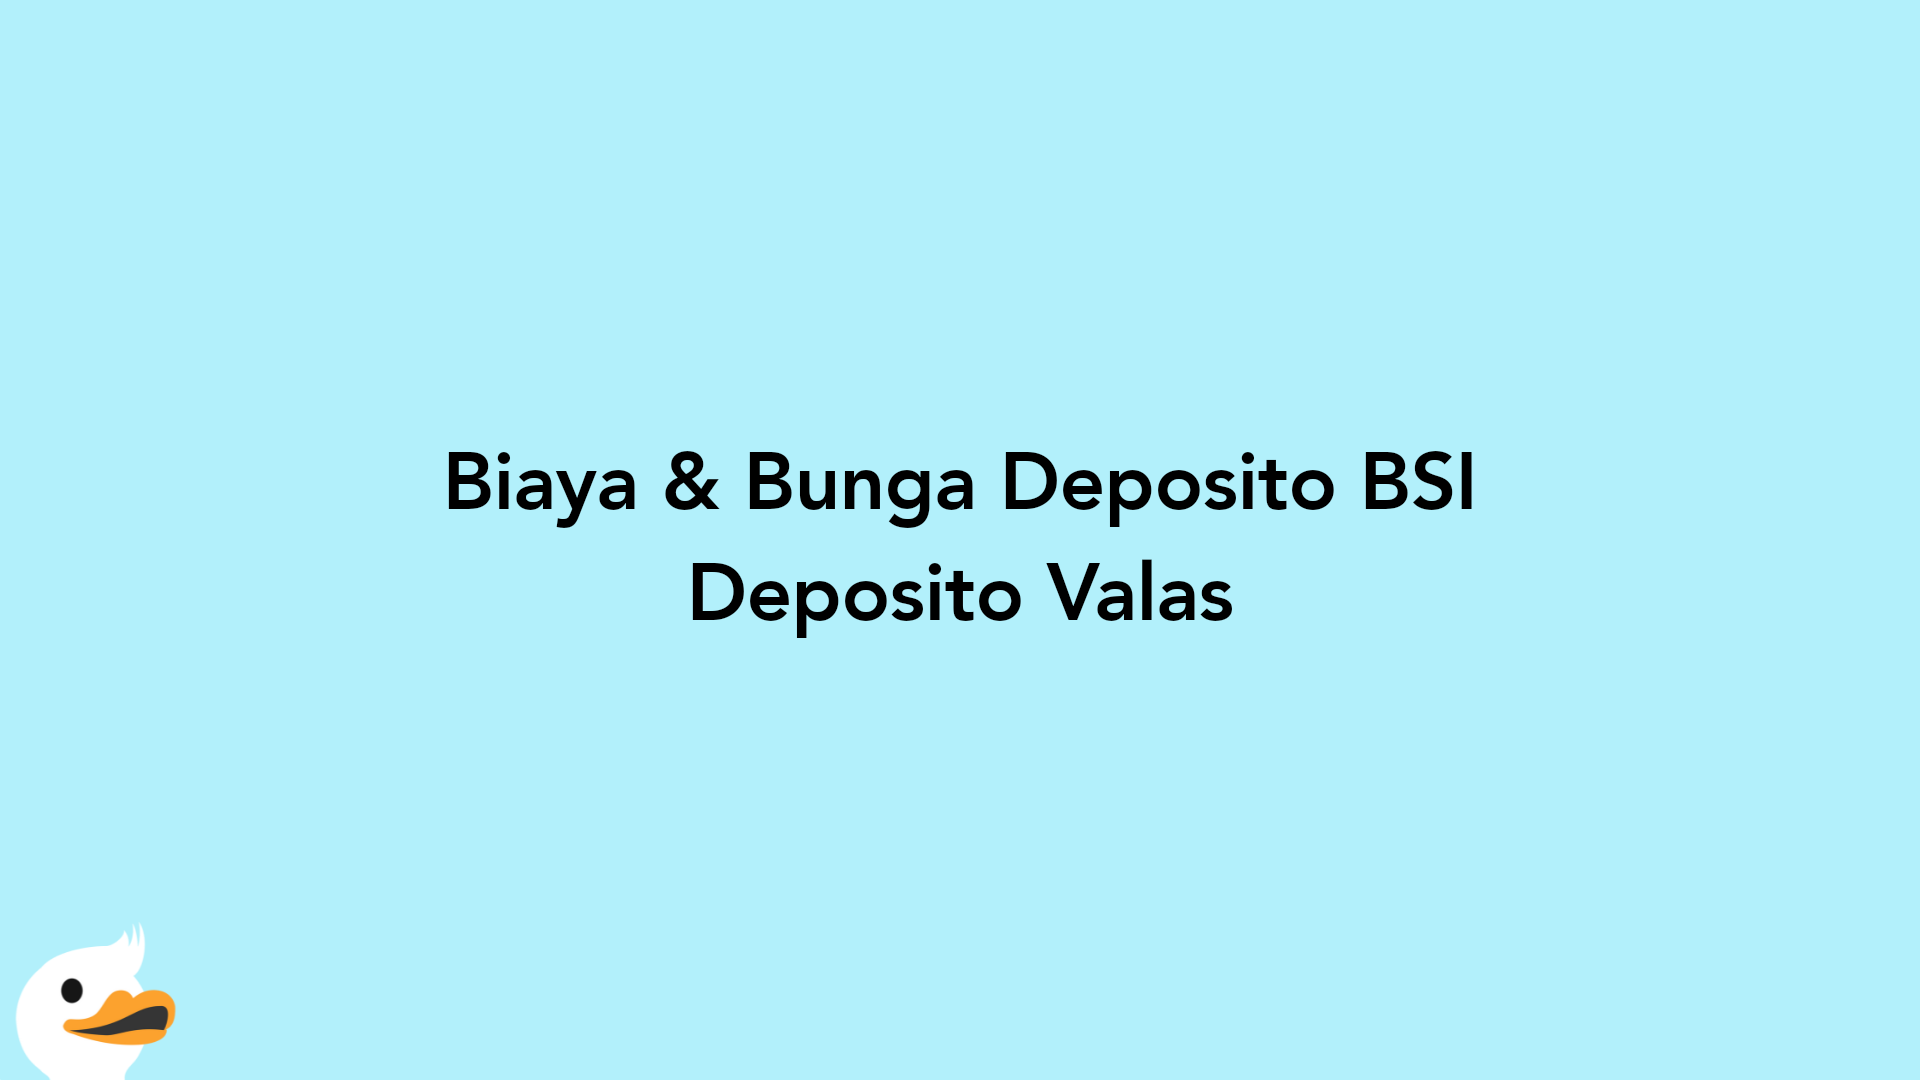 Biaya & Bunga Deposito BSI Deposito Valas